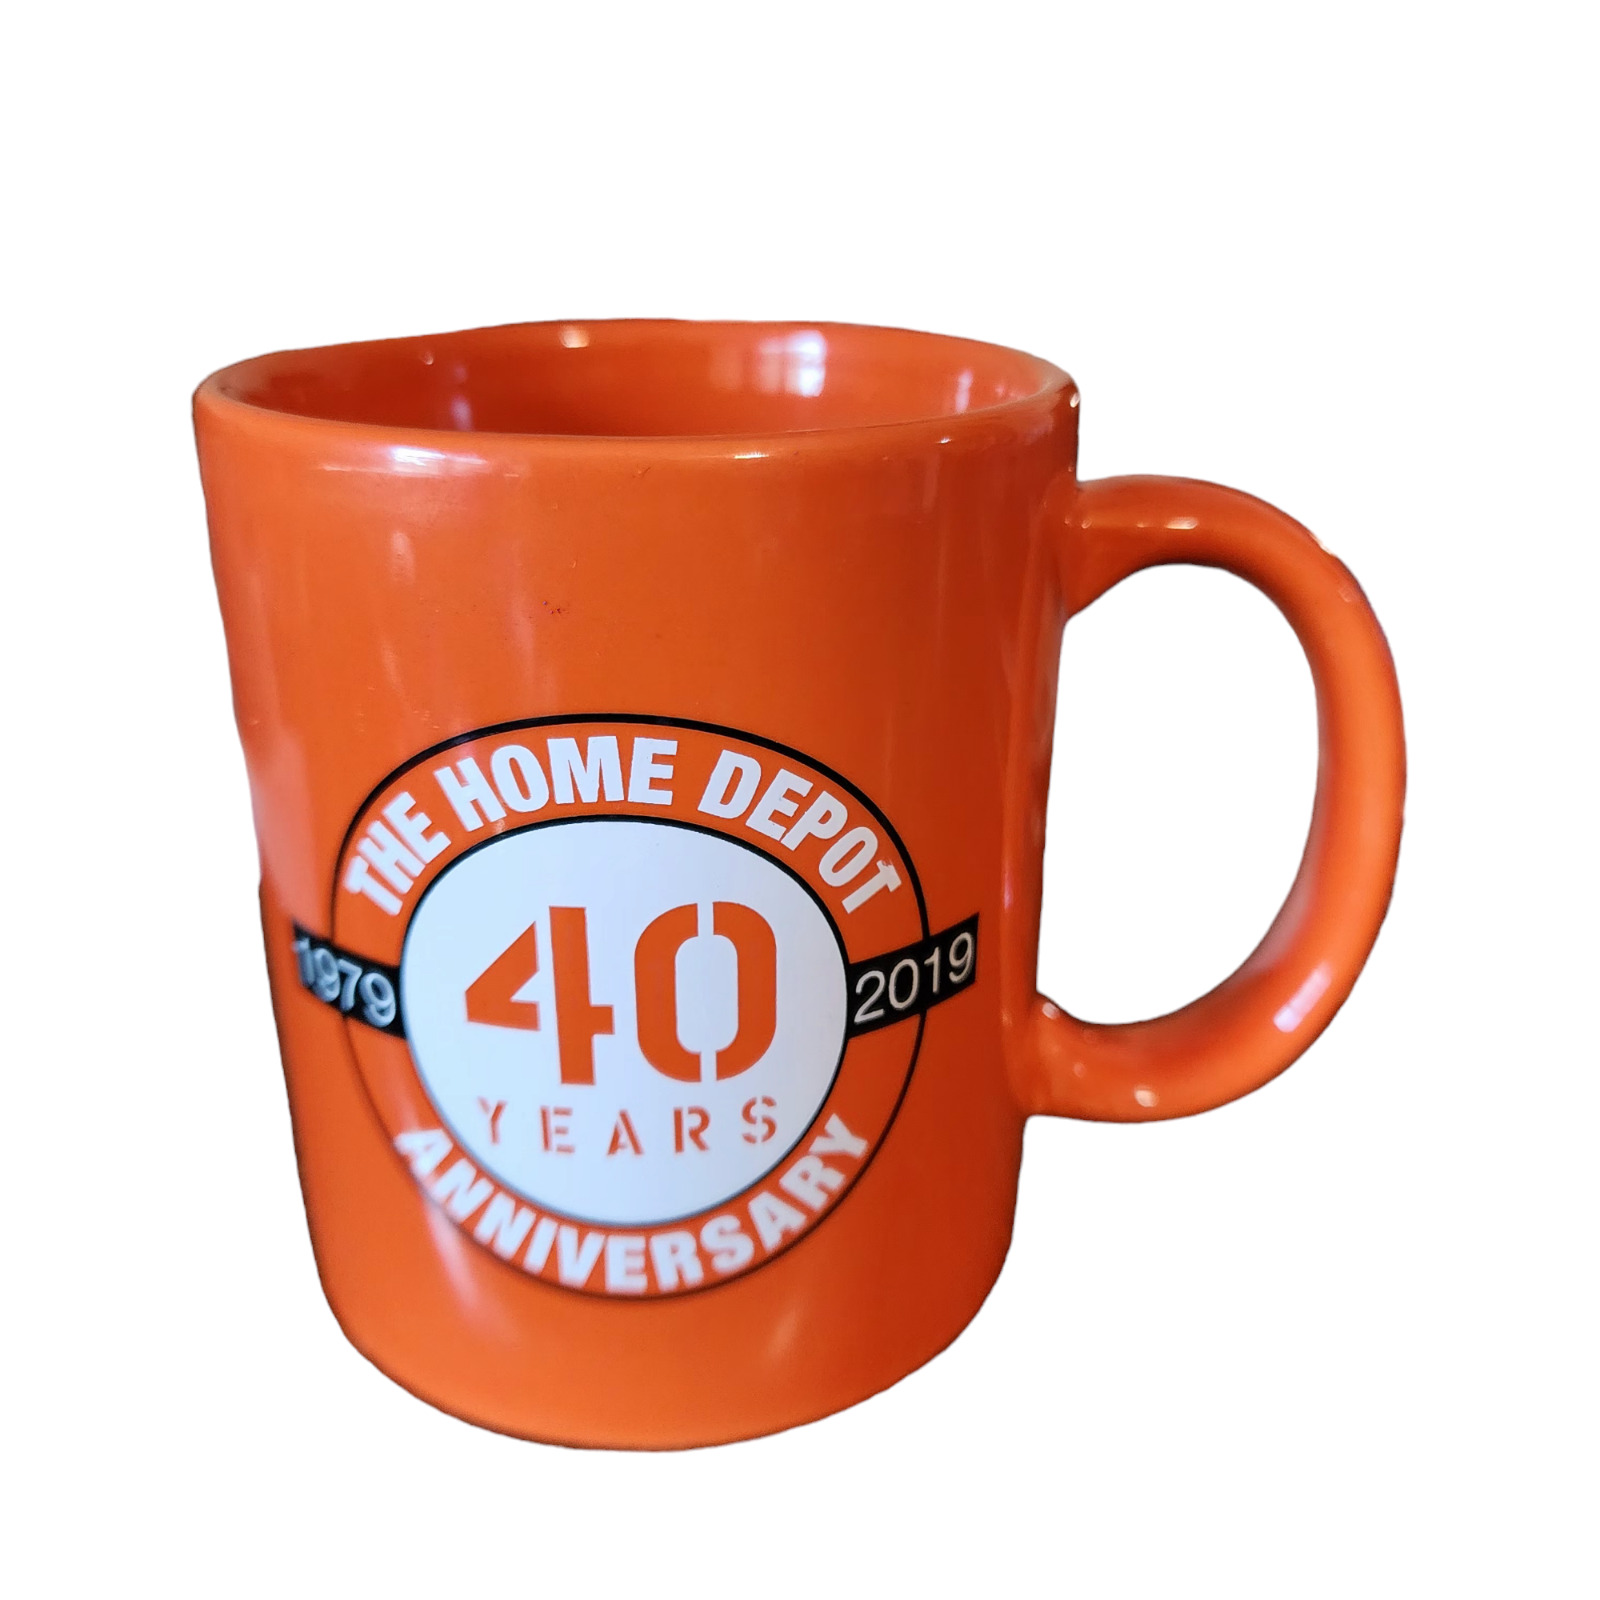 The Home Depot Anniversary Mug Logo Improvement Building Orange Ceramic 40 Years